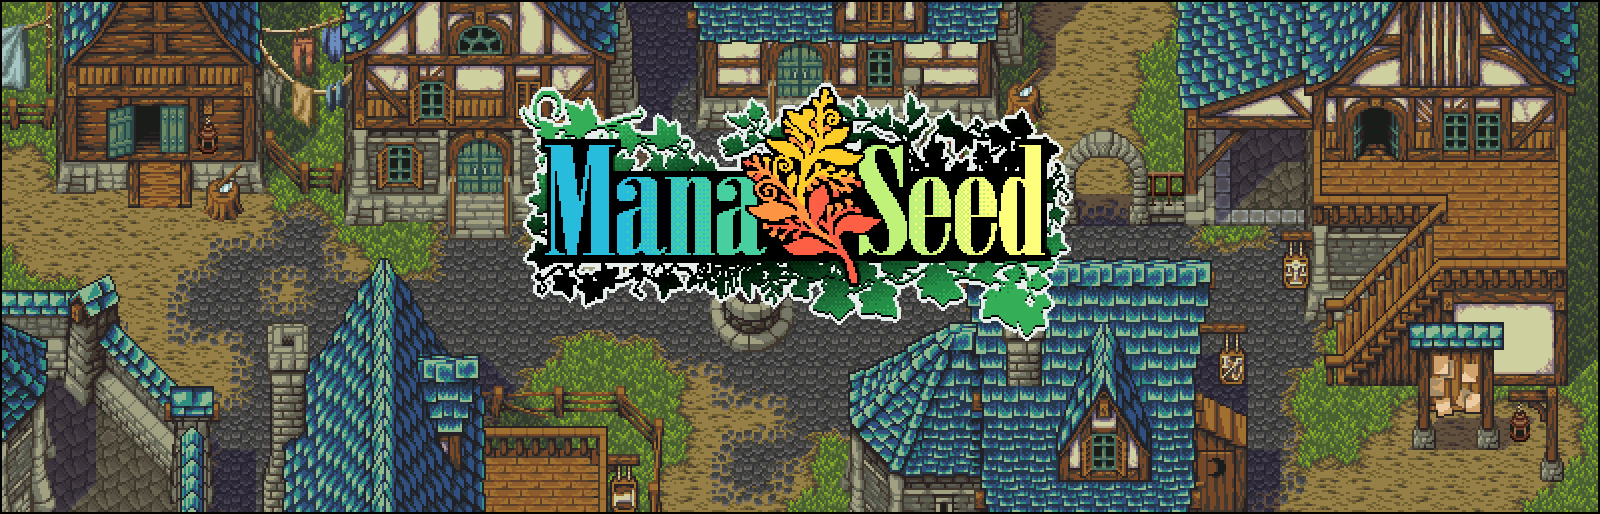 Pixel Art Character Base - A "Mana Seed" Sprite Sheet